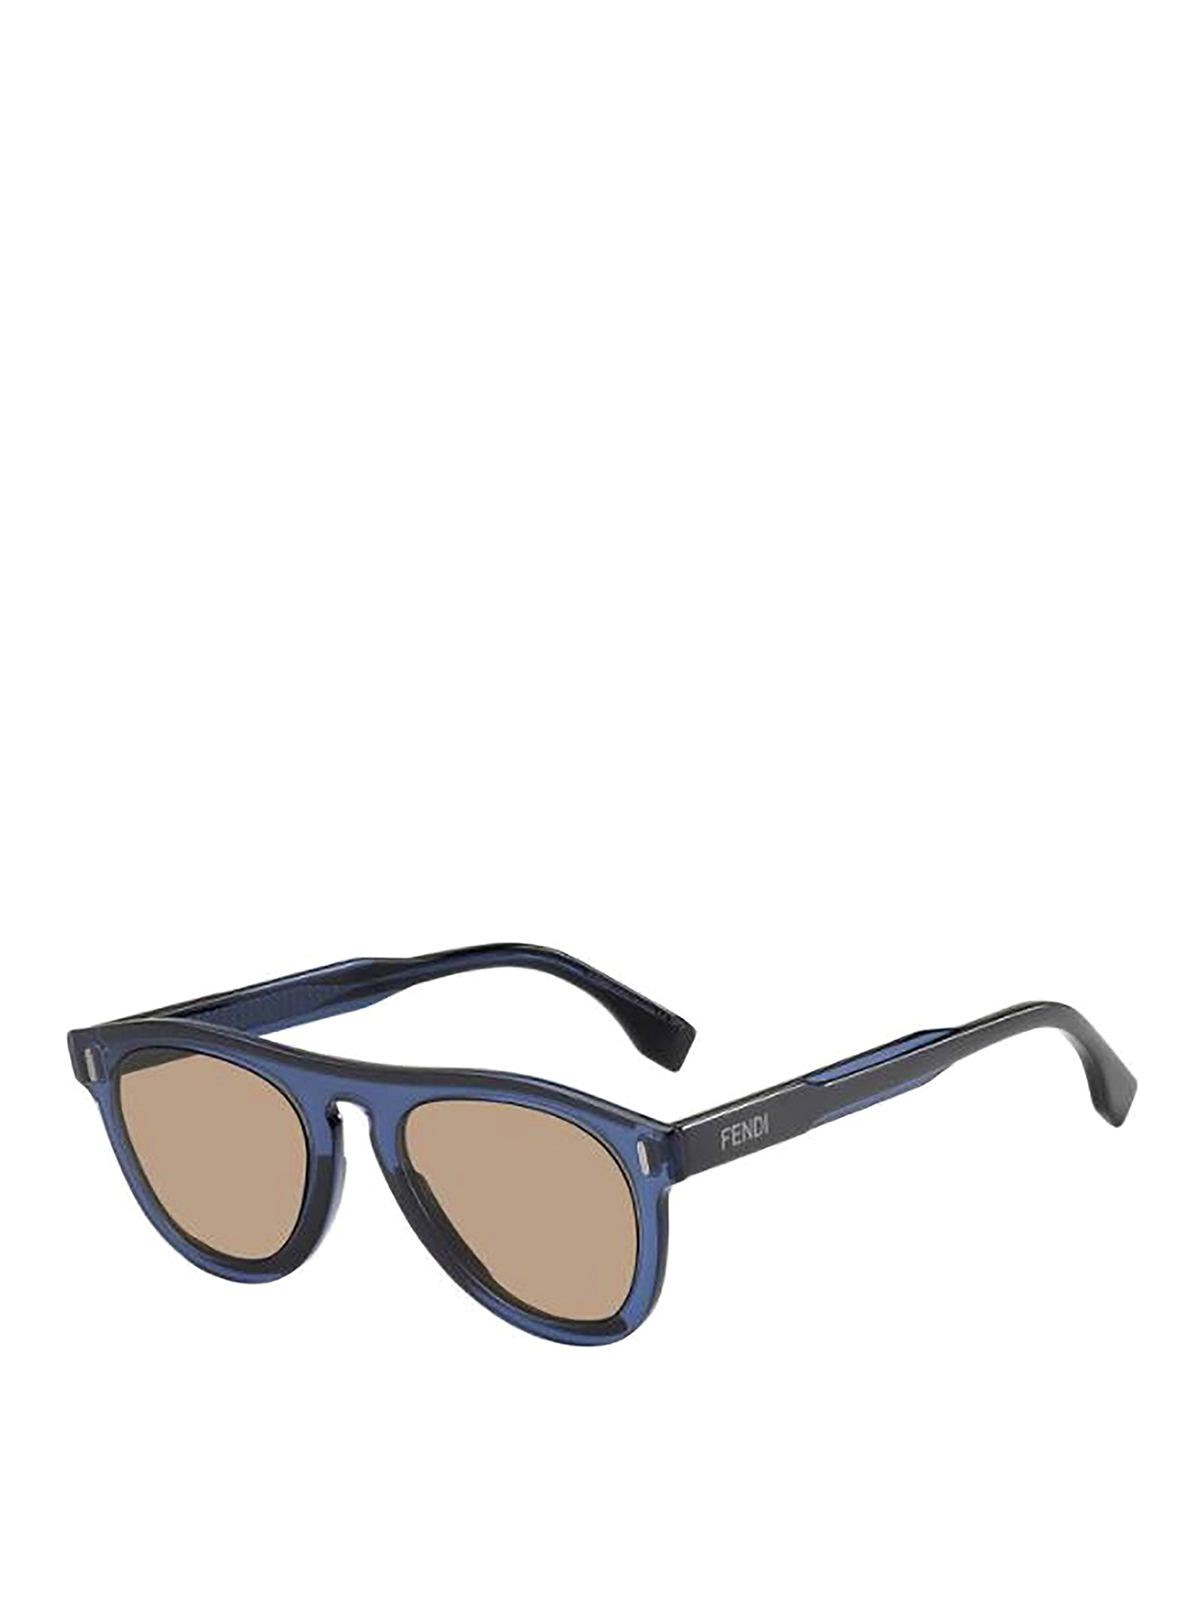 Fendi Acetate Rounded Sunglasses In Blue